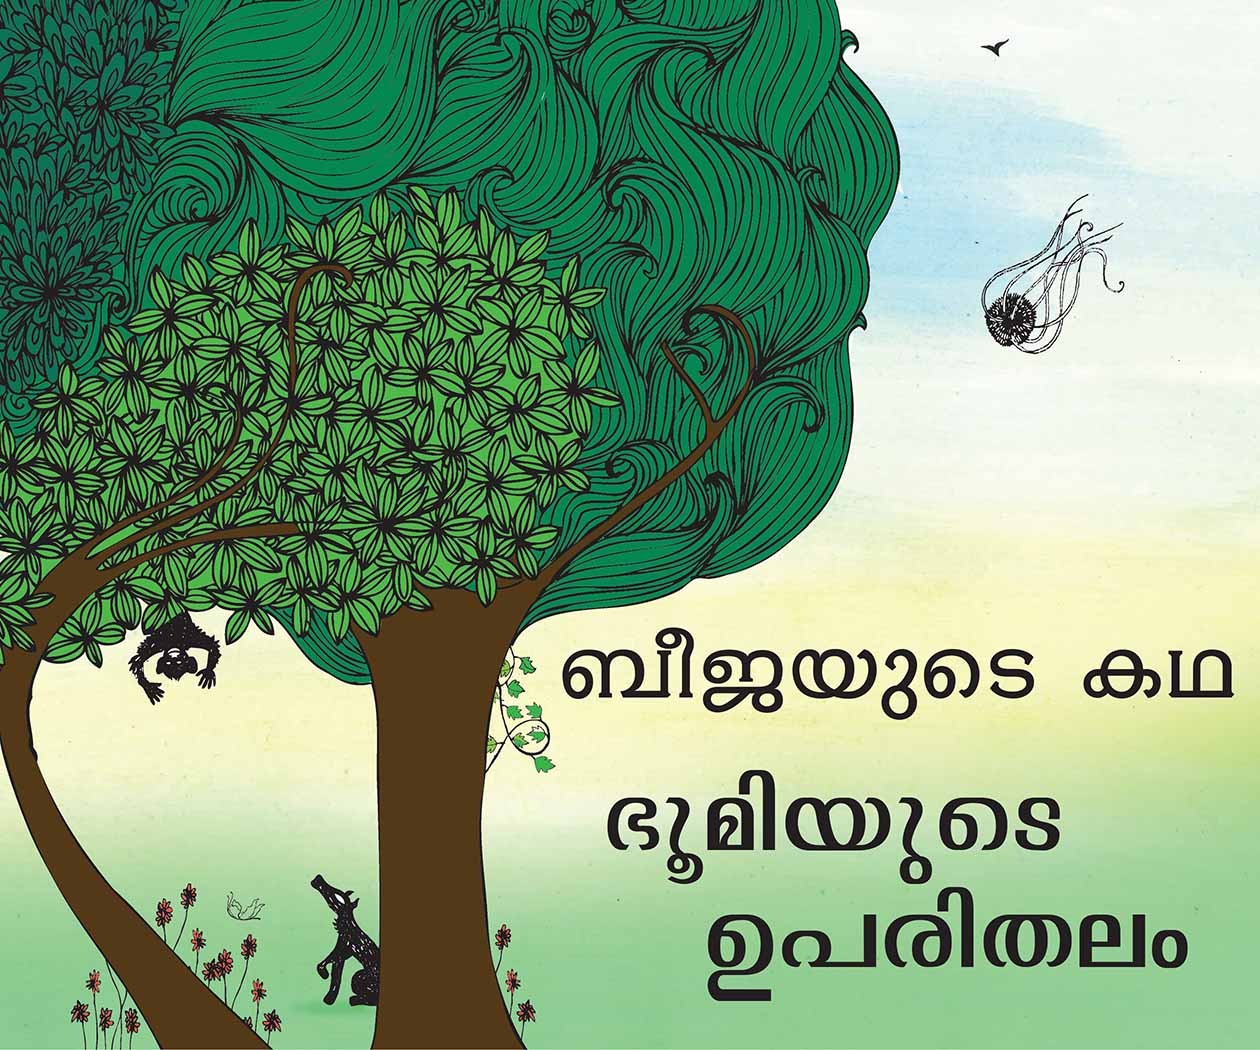 Beeji's Story-Earth's Surface/Beejayude Katha-Bhumiyude Uparithalam (Malayalam)